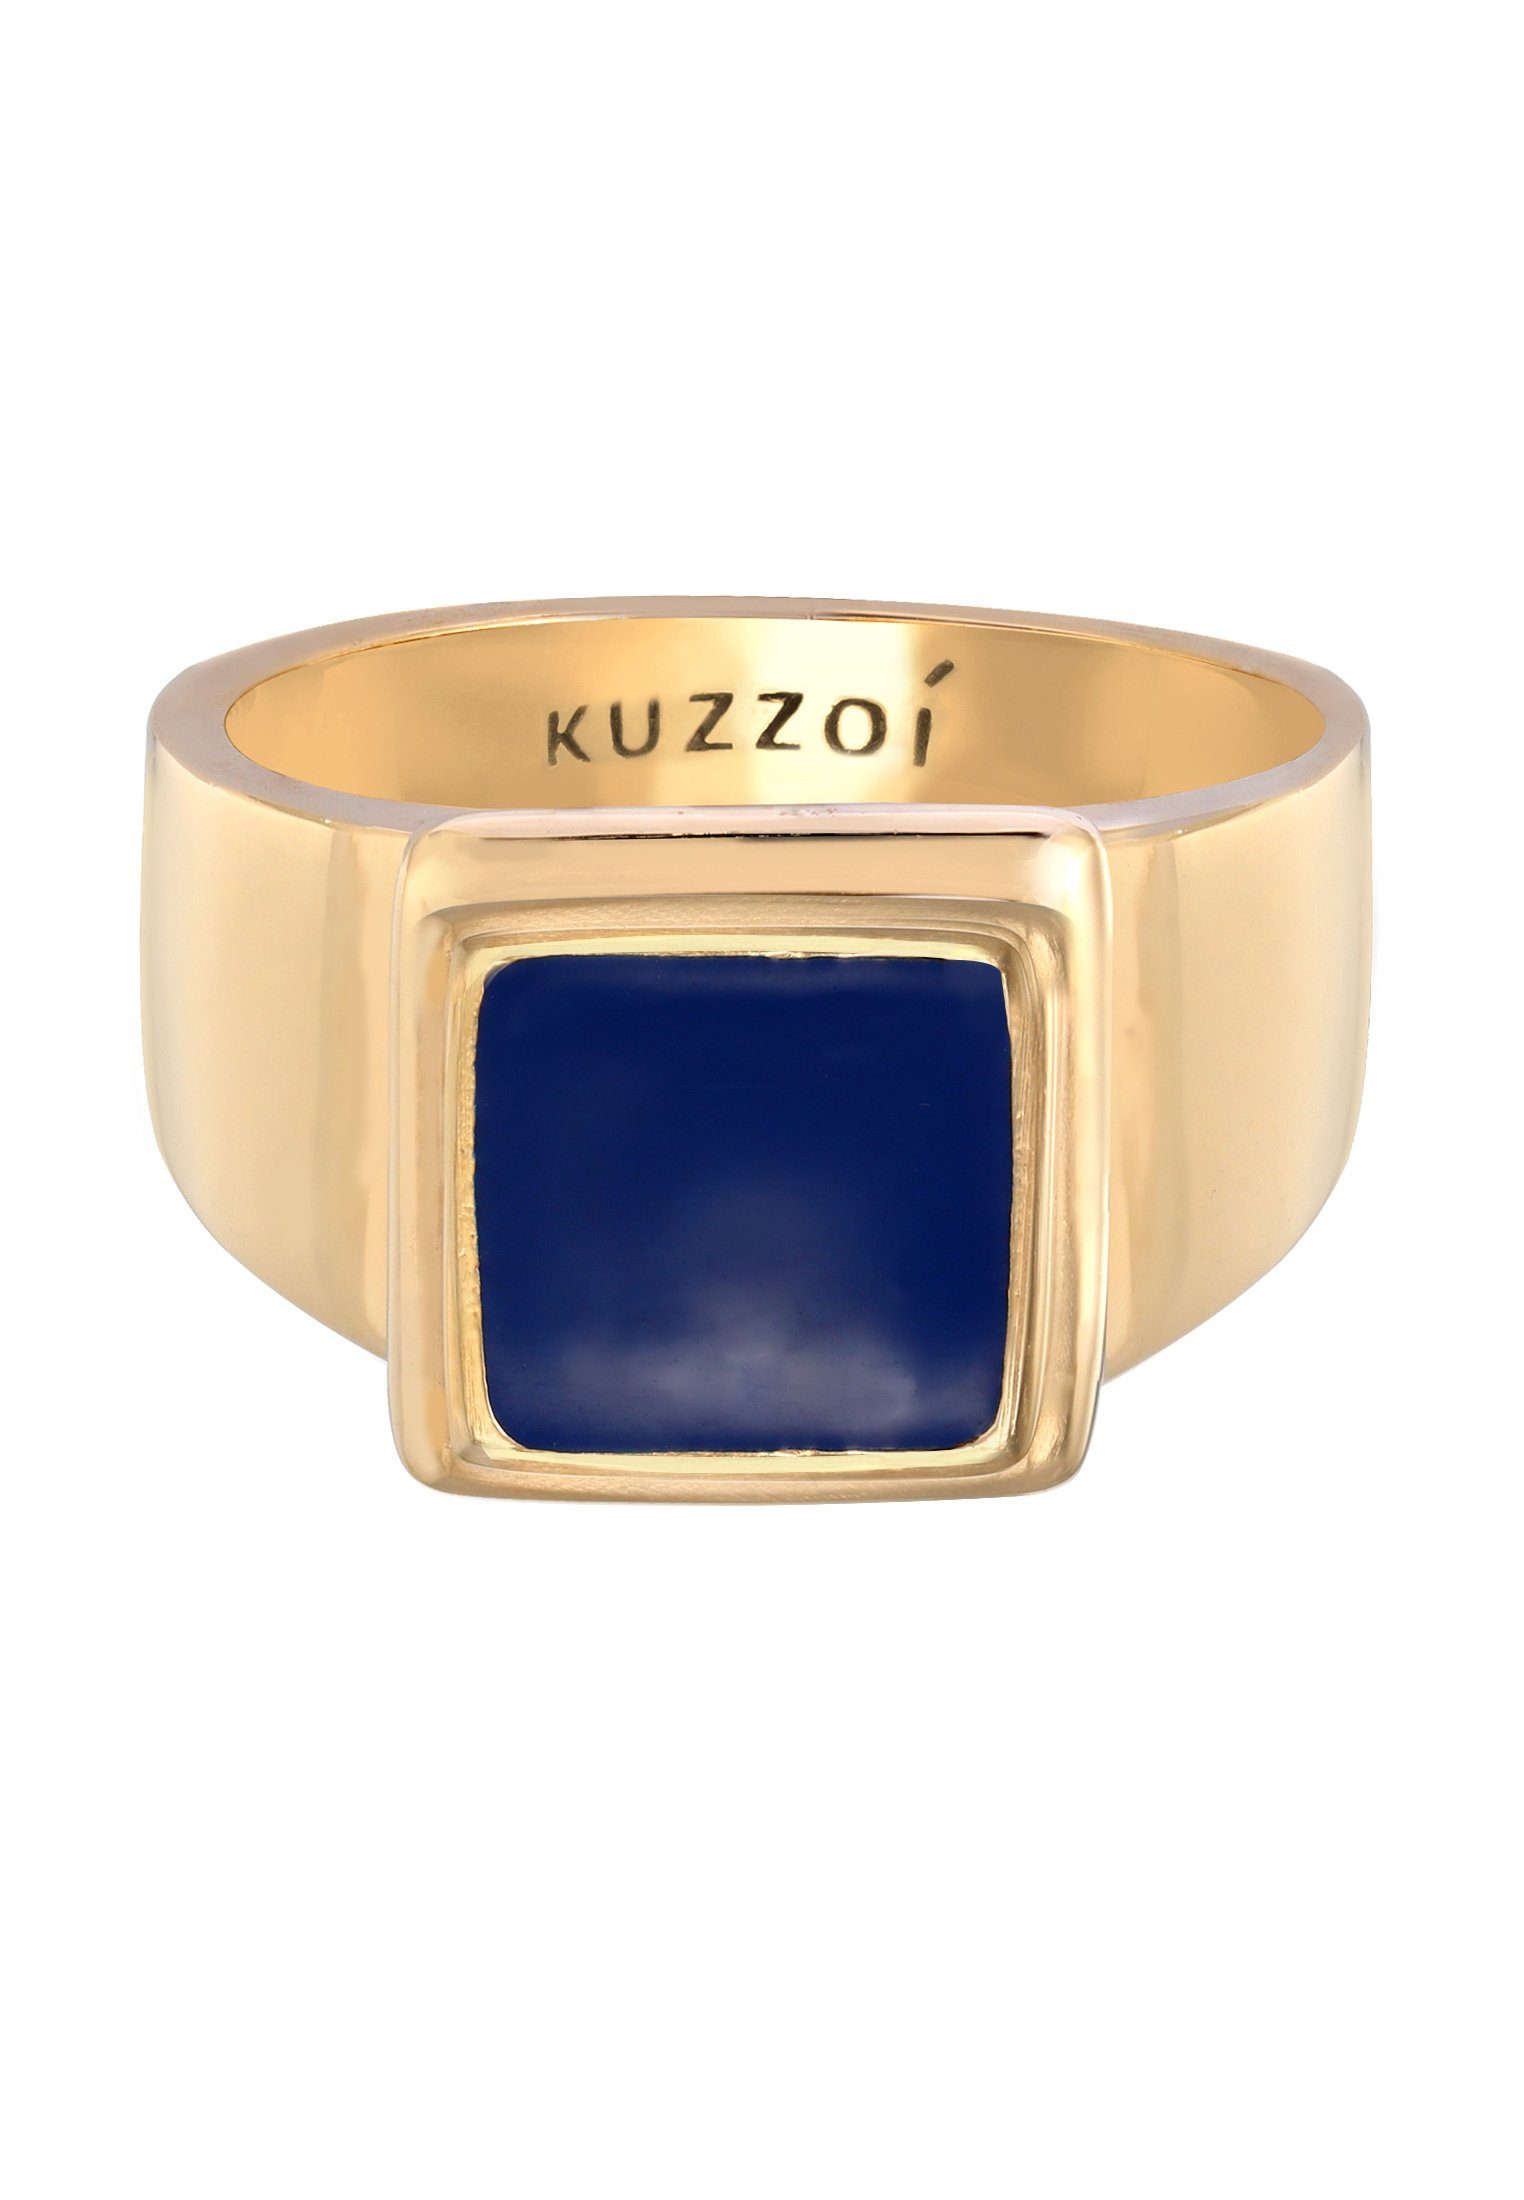 Kuzzoi Siegelring Siegelring Quadrat Emaille Silber Gold 925